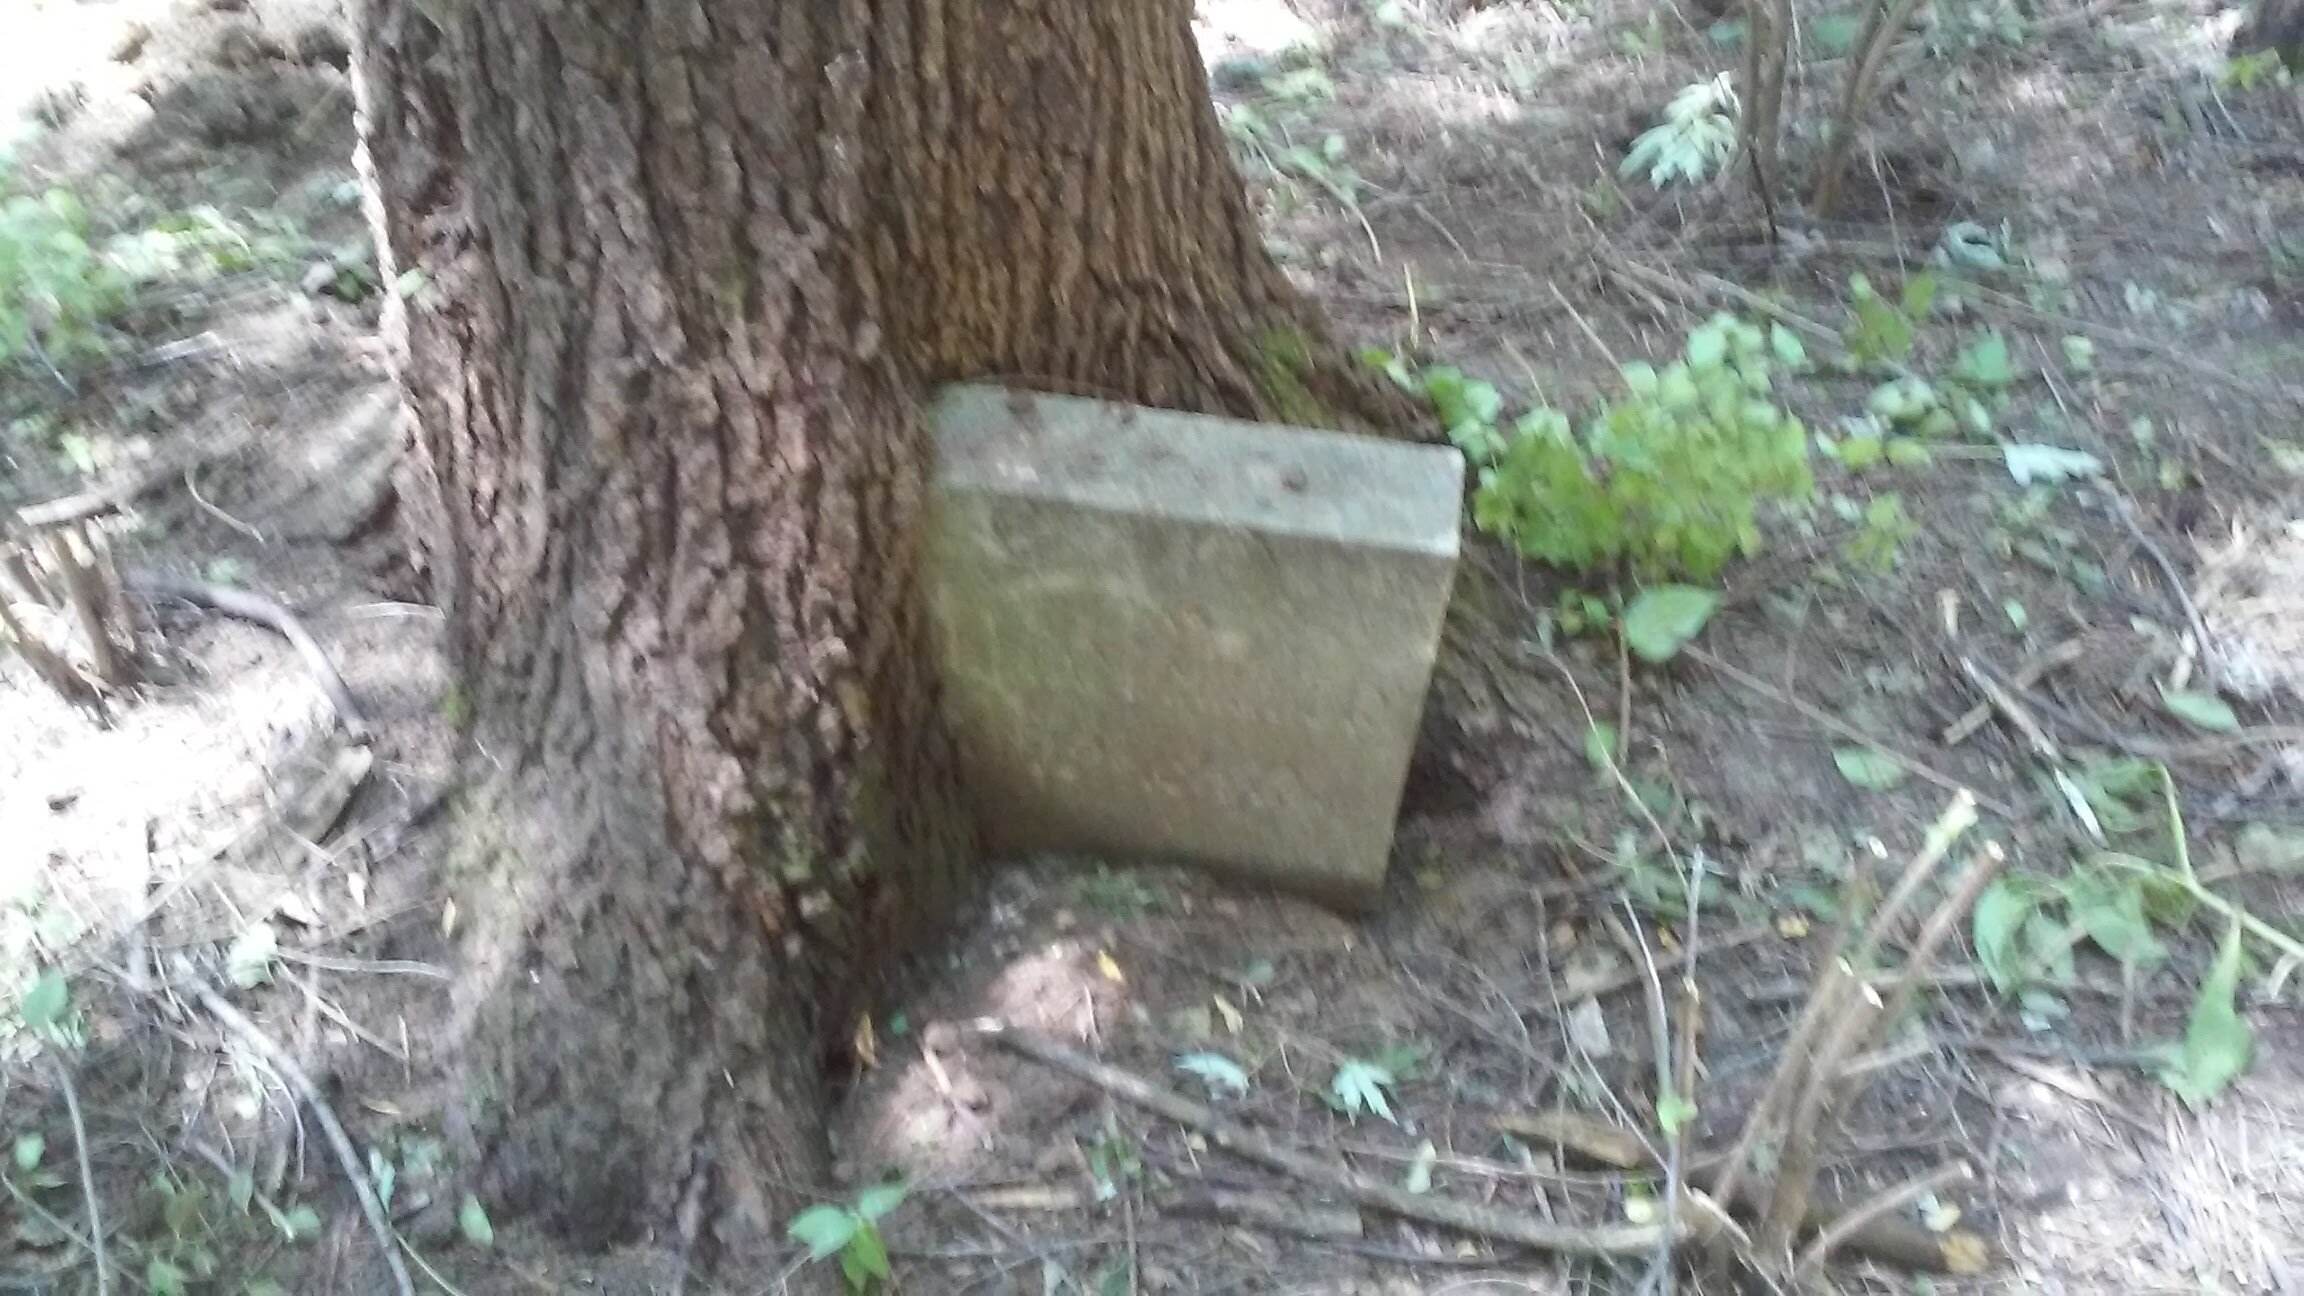 Headstone in Tree - wanda brandon.jpg